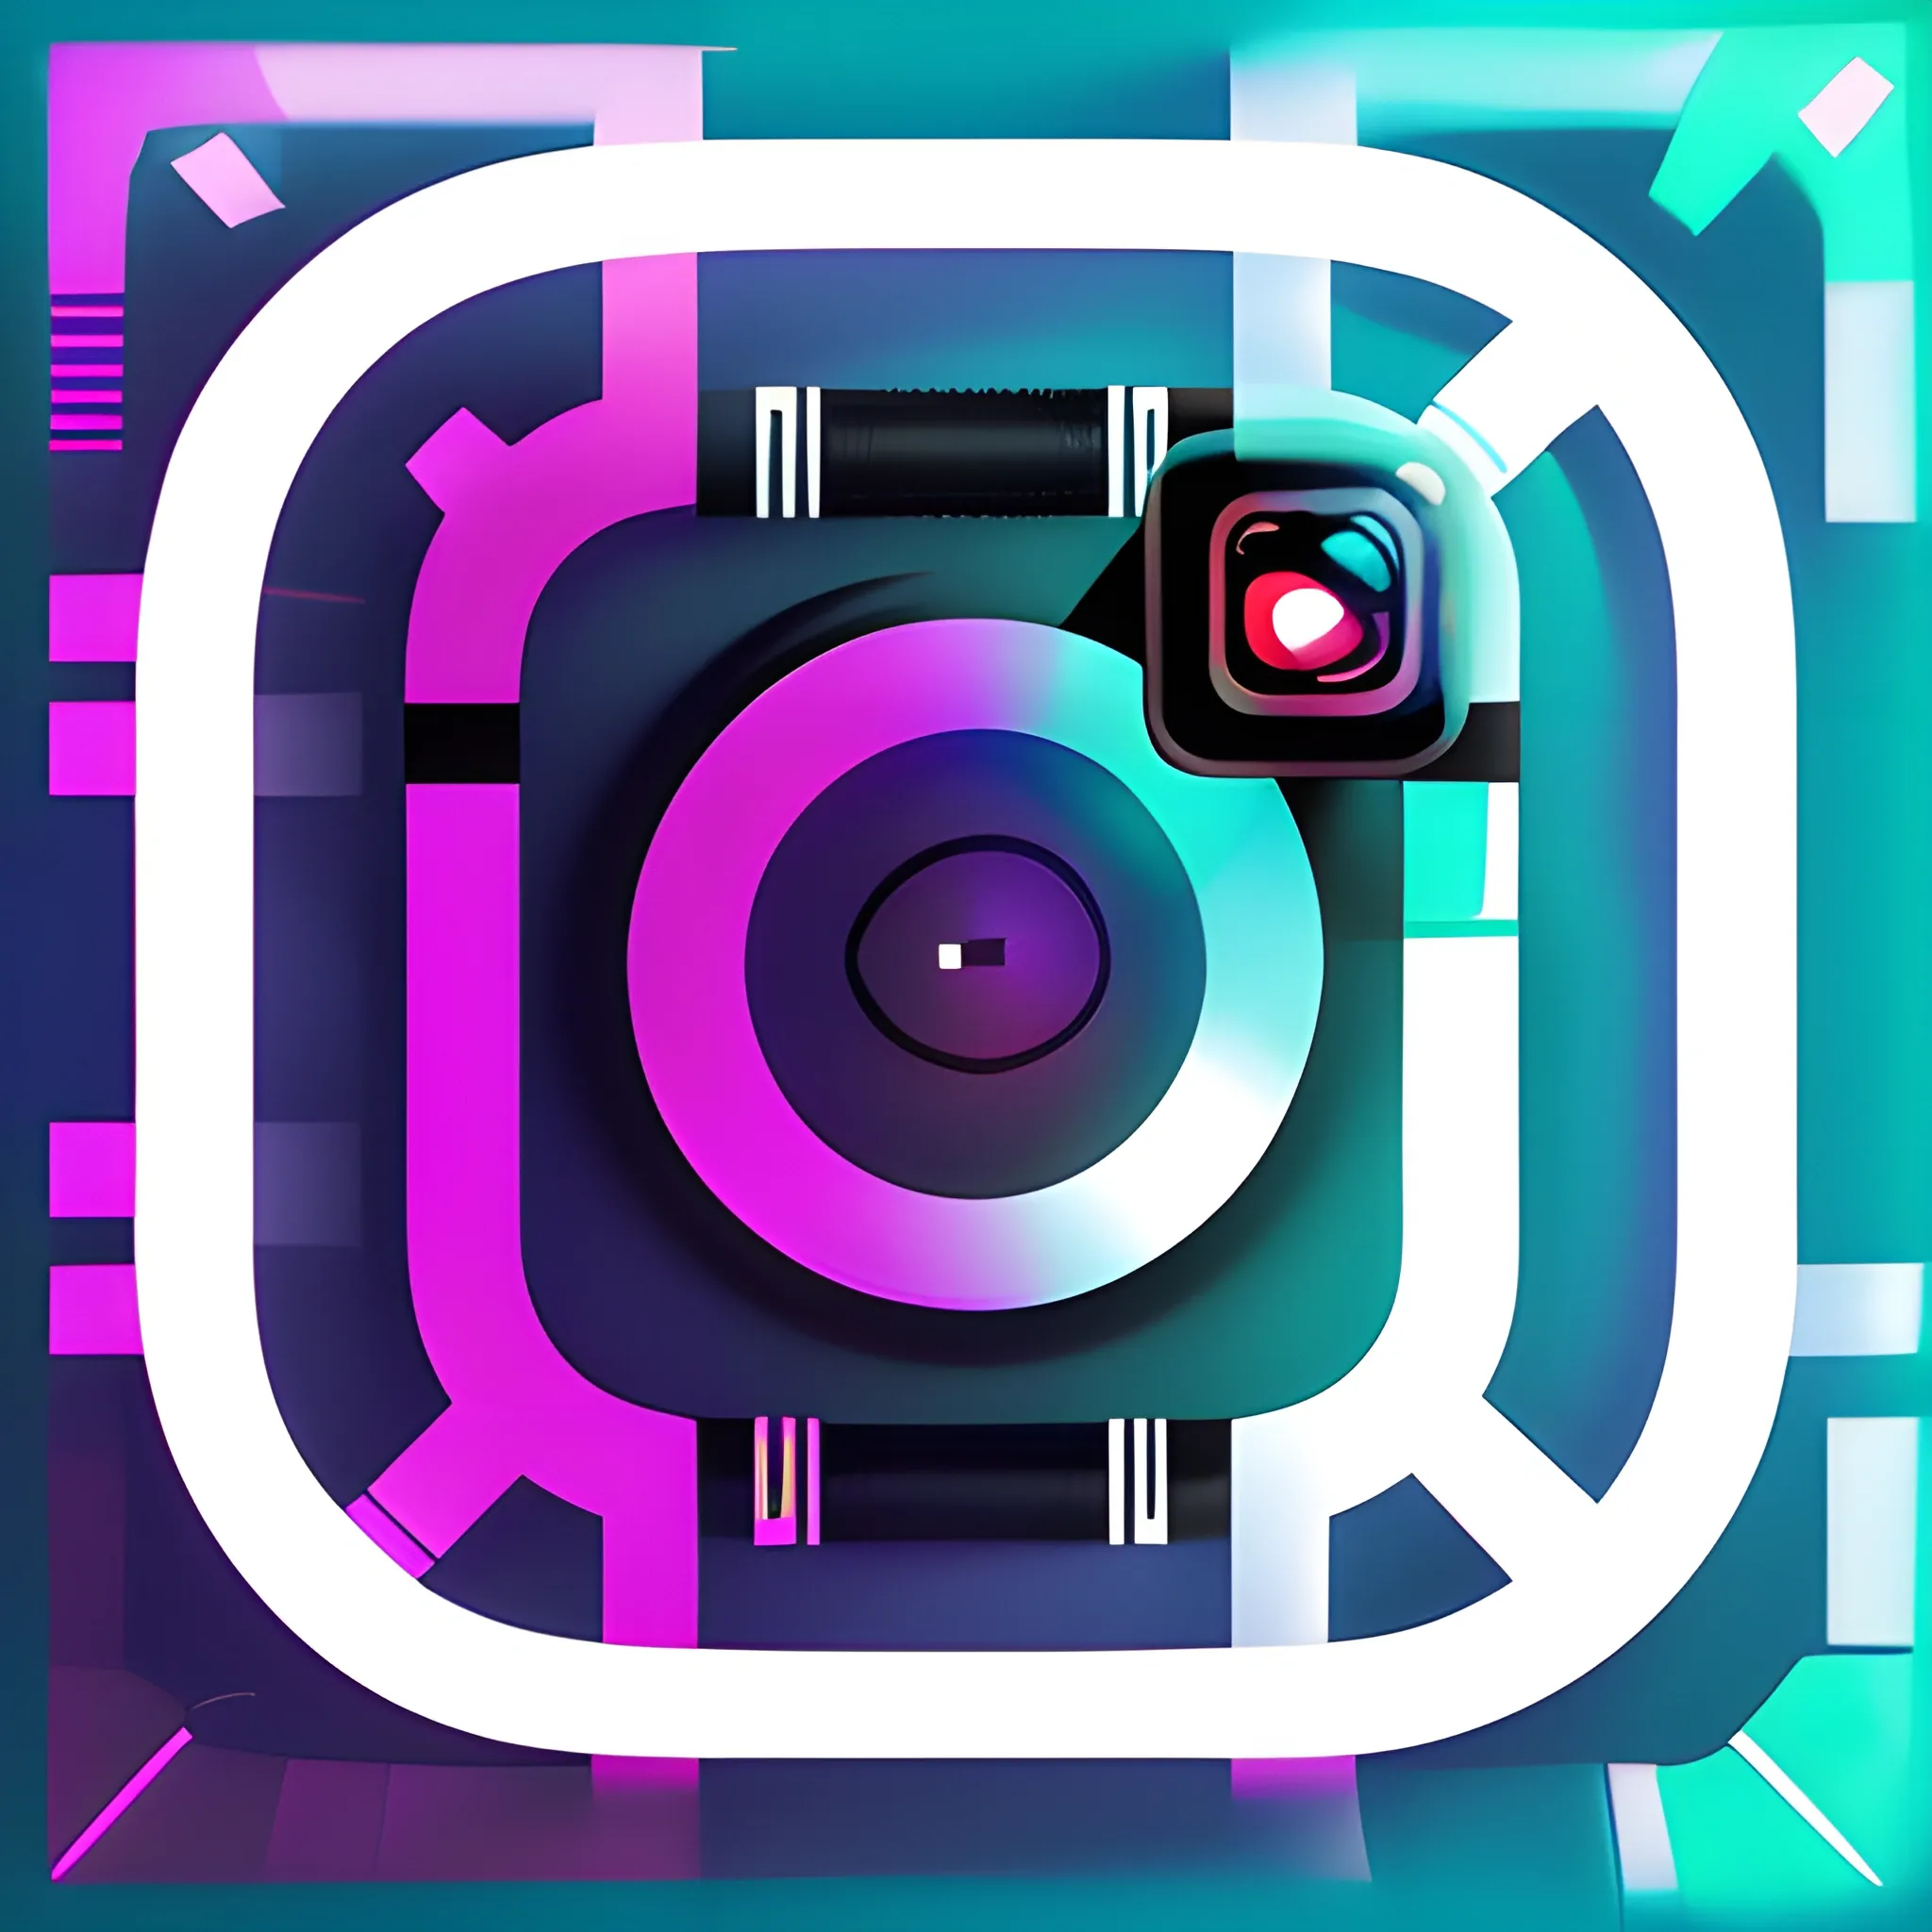 instagram logo with cyberpunk style